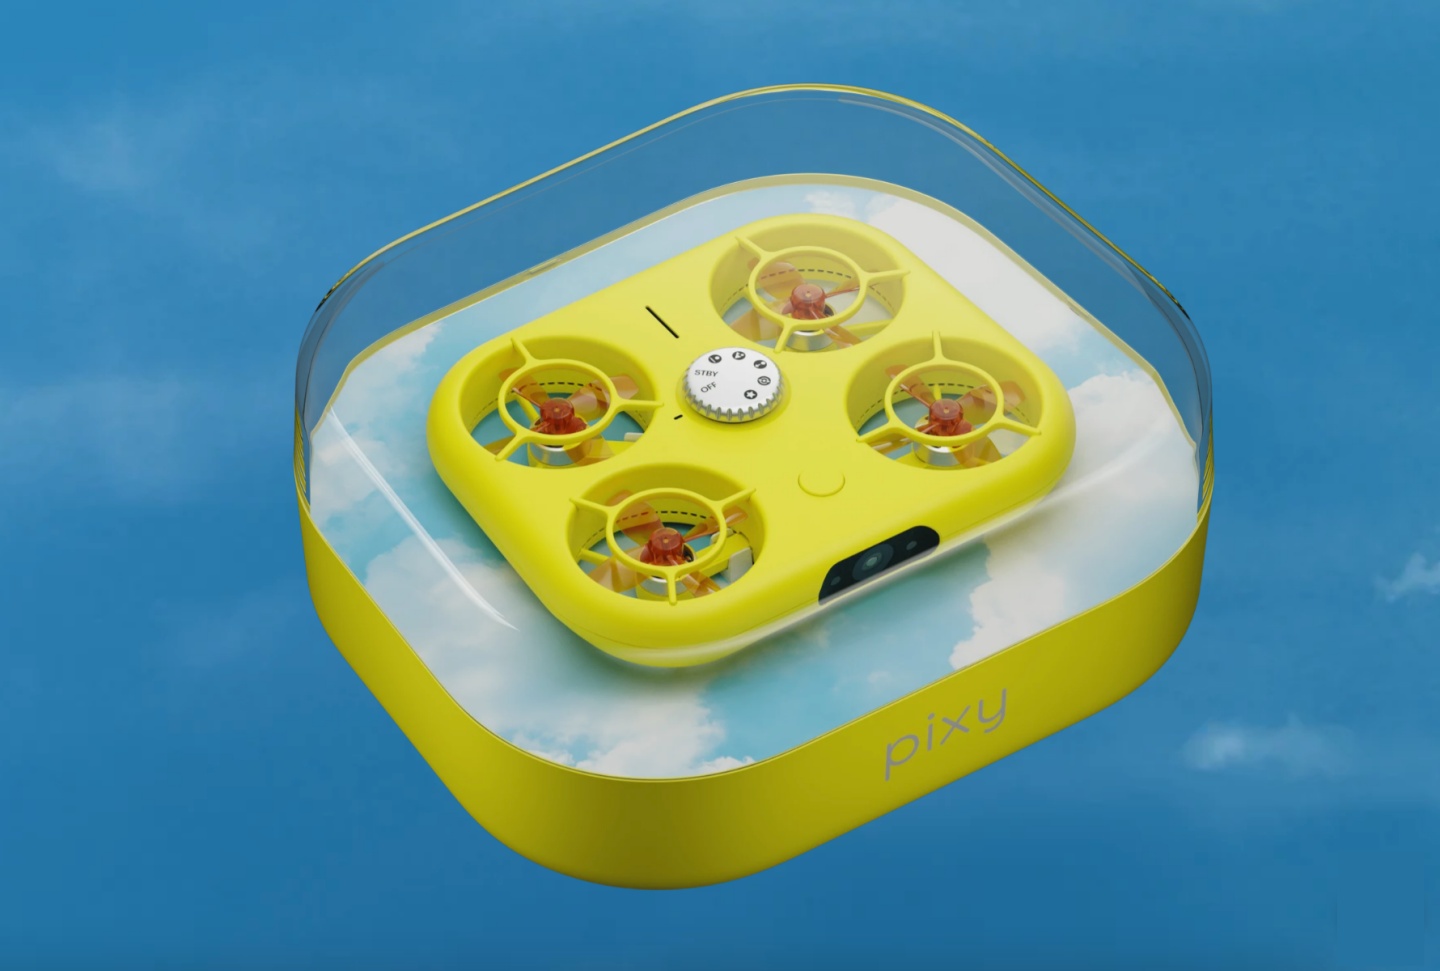 Snapchat 推出迷你空拍機 Pixy！體積小巧超可愛，免遙控器就能操作 售價約 6,700 元新台幣